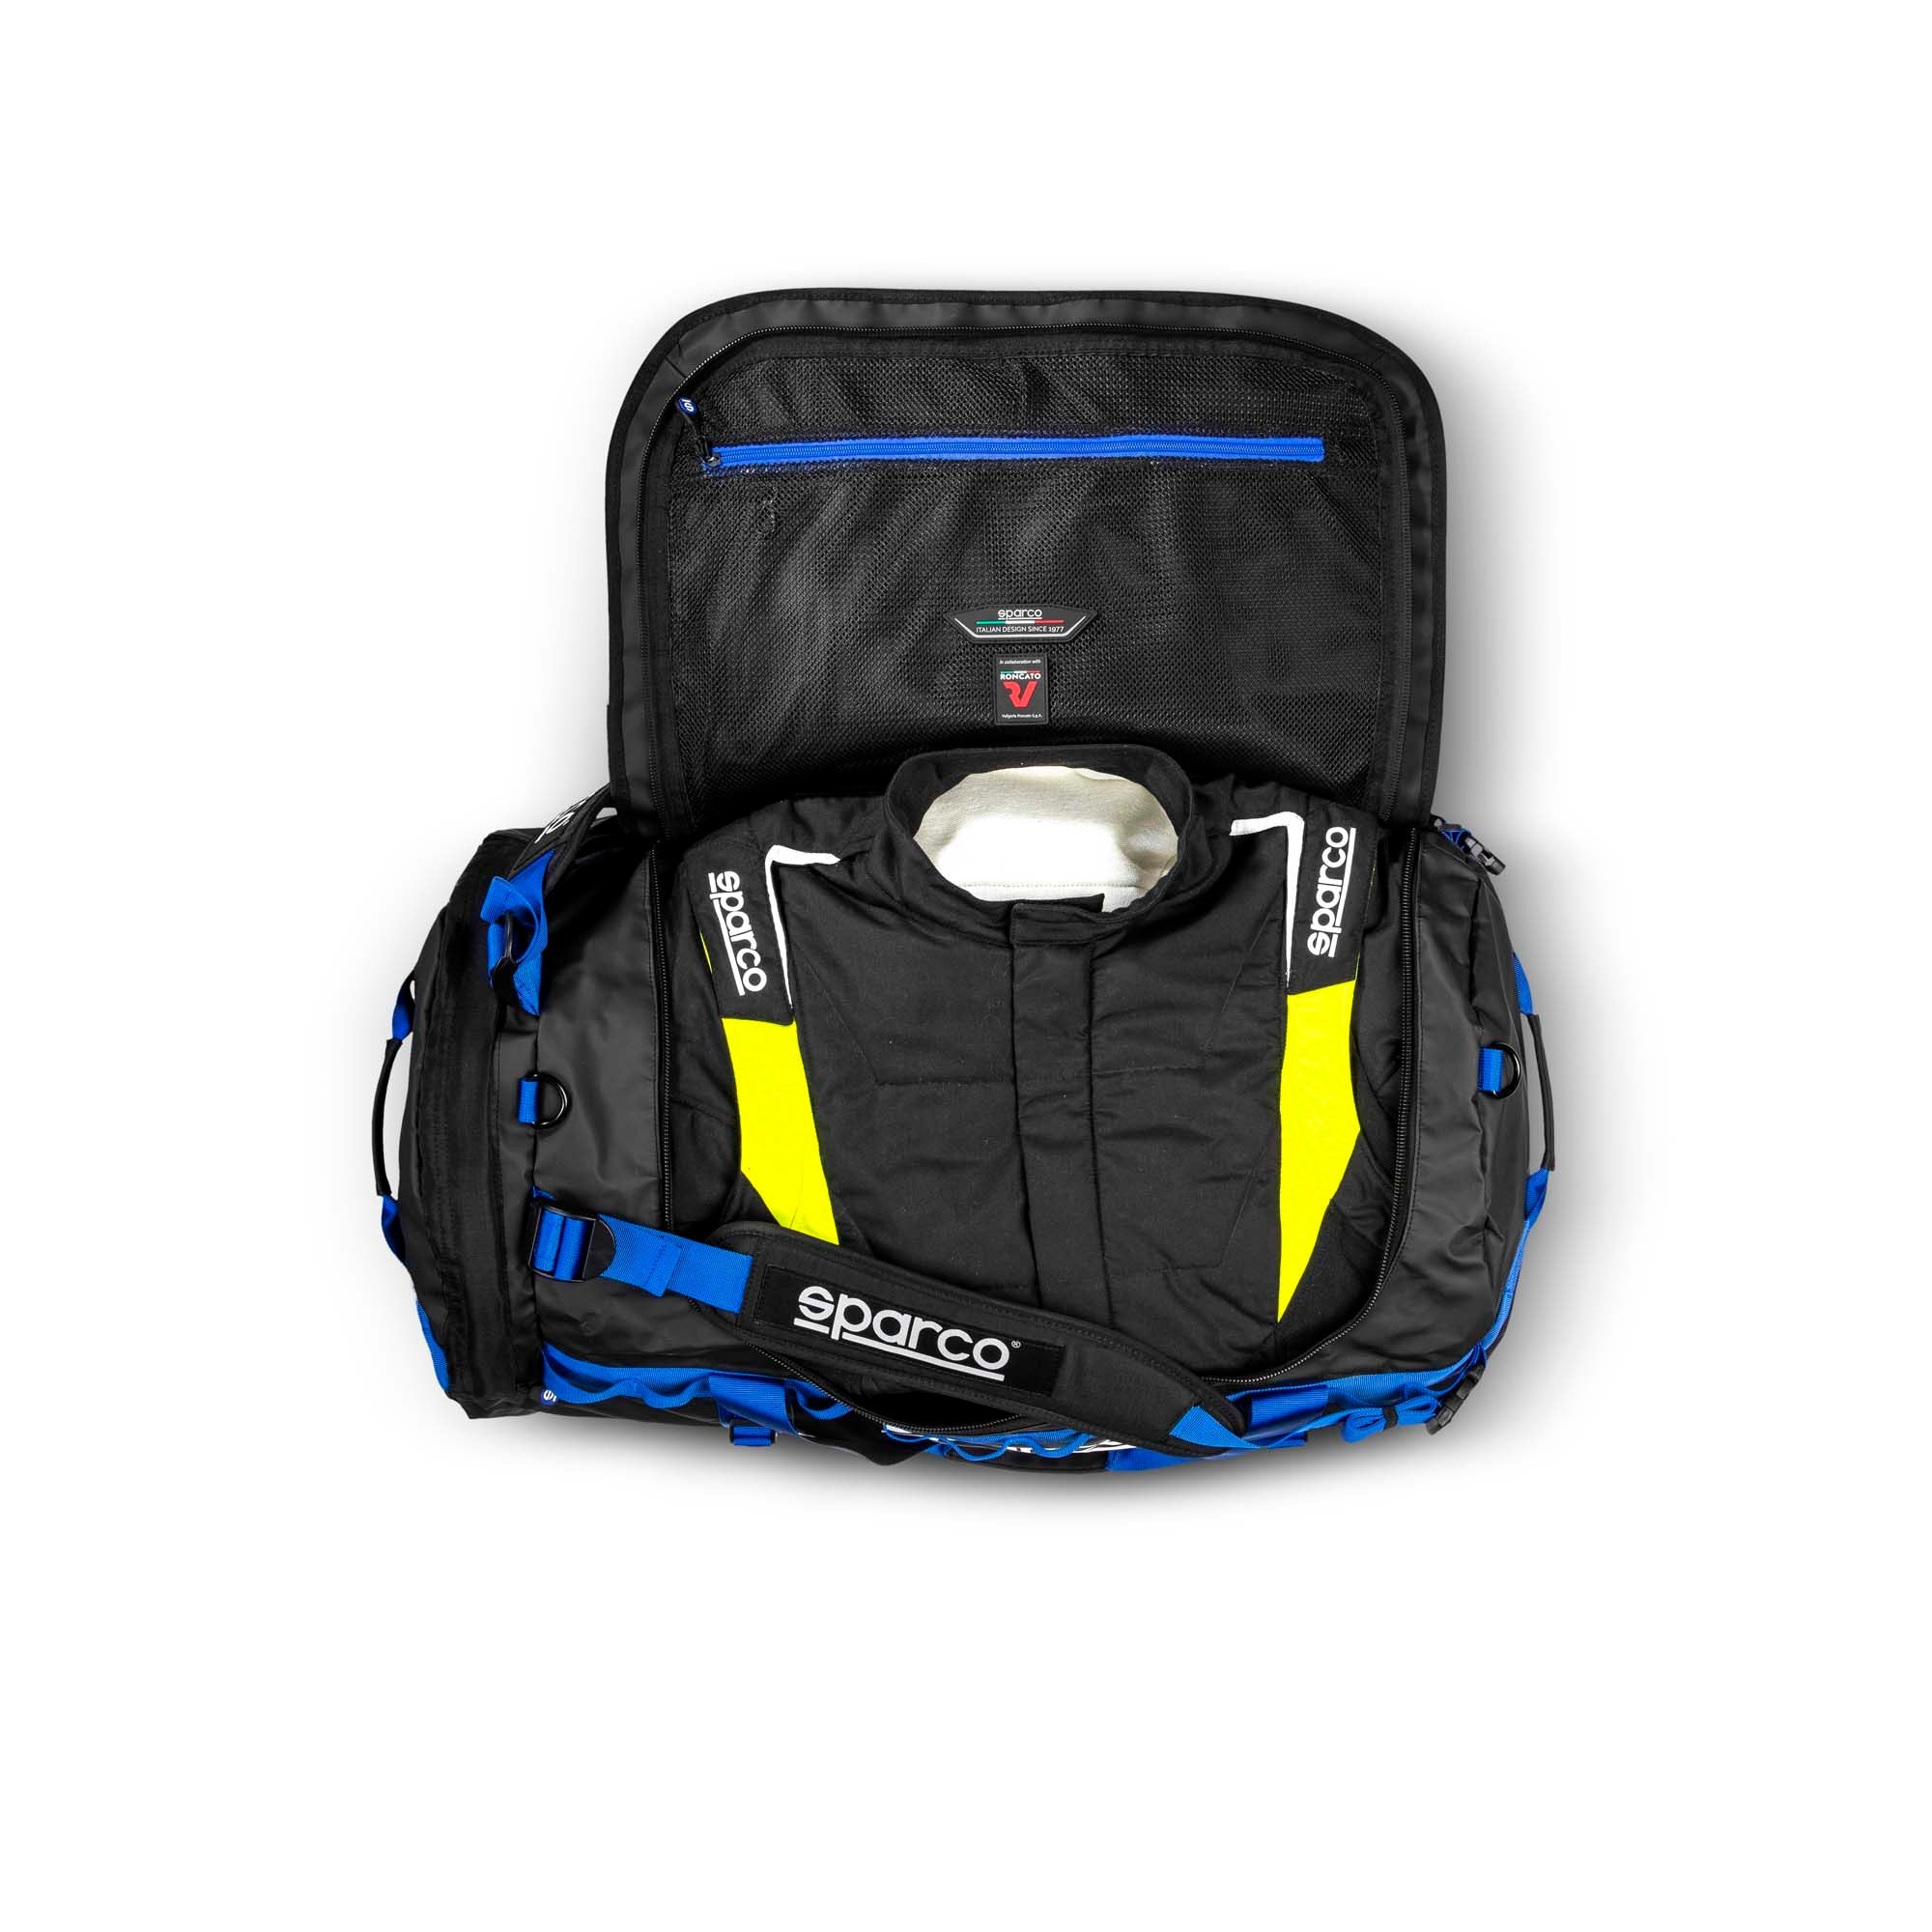 Dakar Rally DKR TAKER VII backpack khaki | Accessories \ Luggage \  Backpacks Shop by Team \ Racing Teams \ Dakar | F1store.net